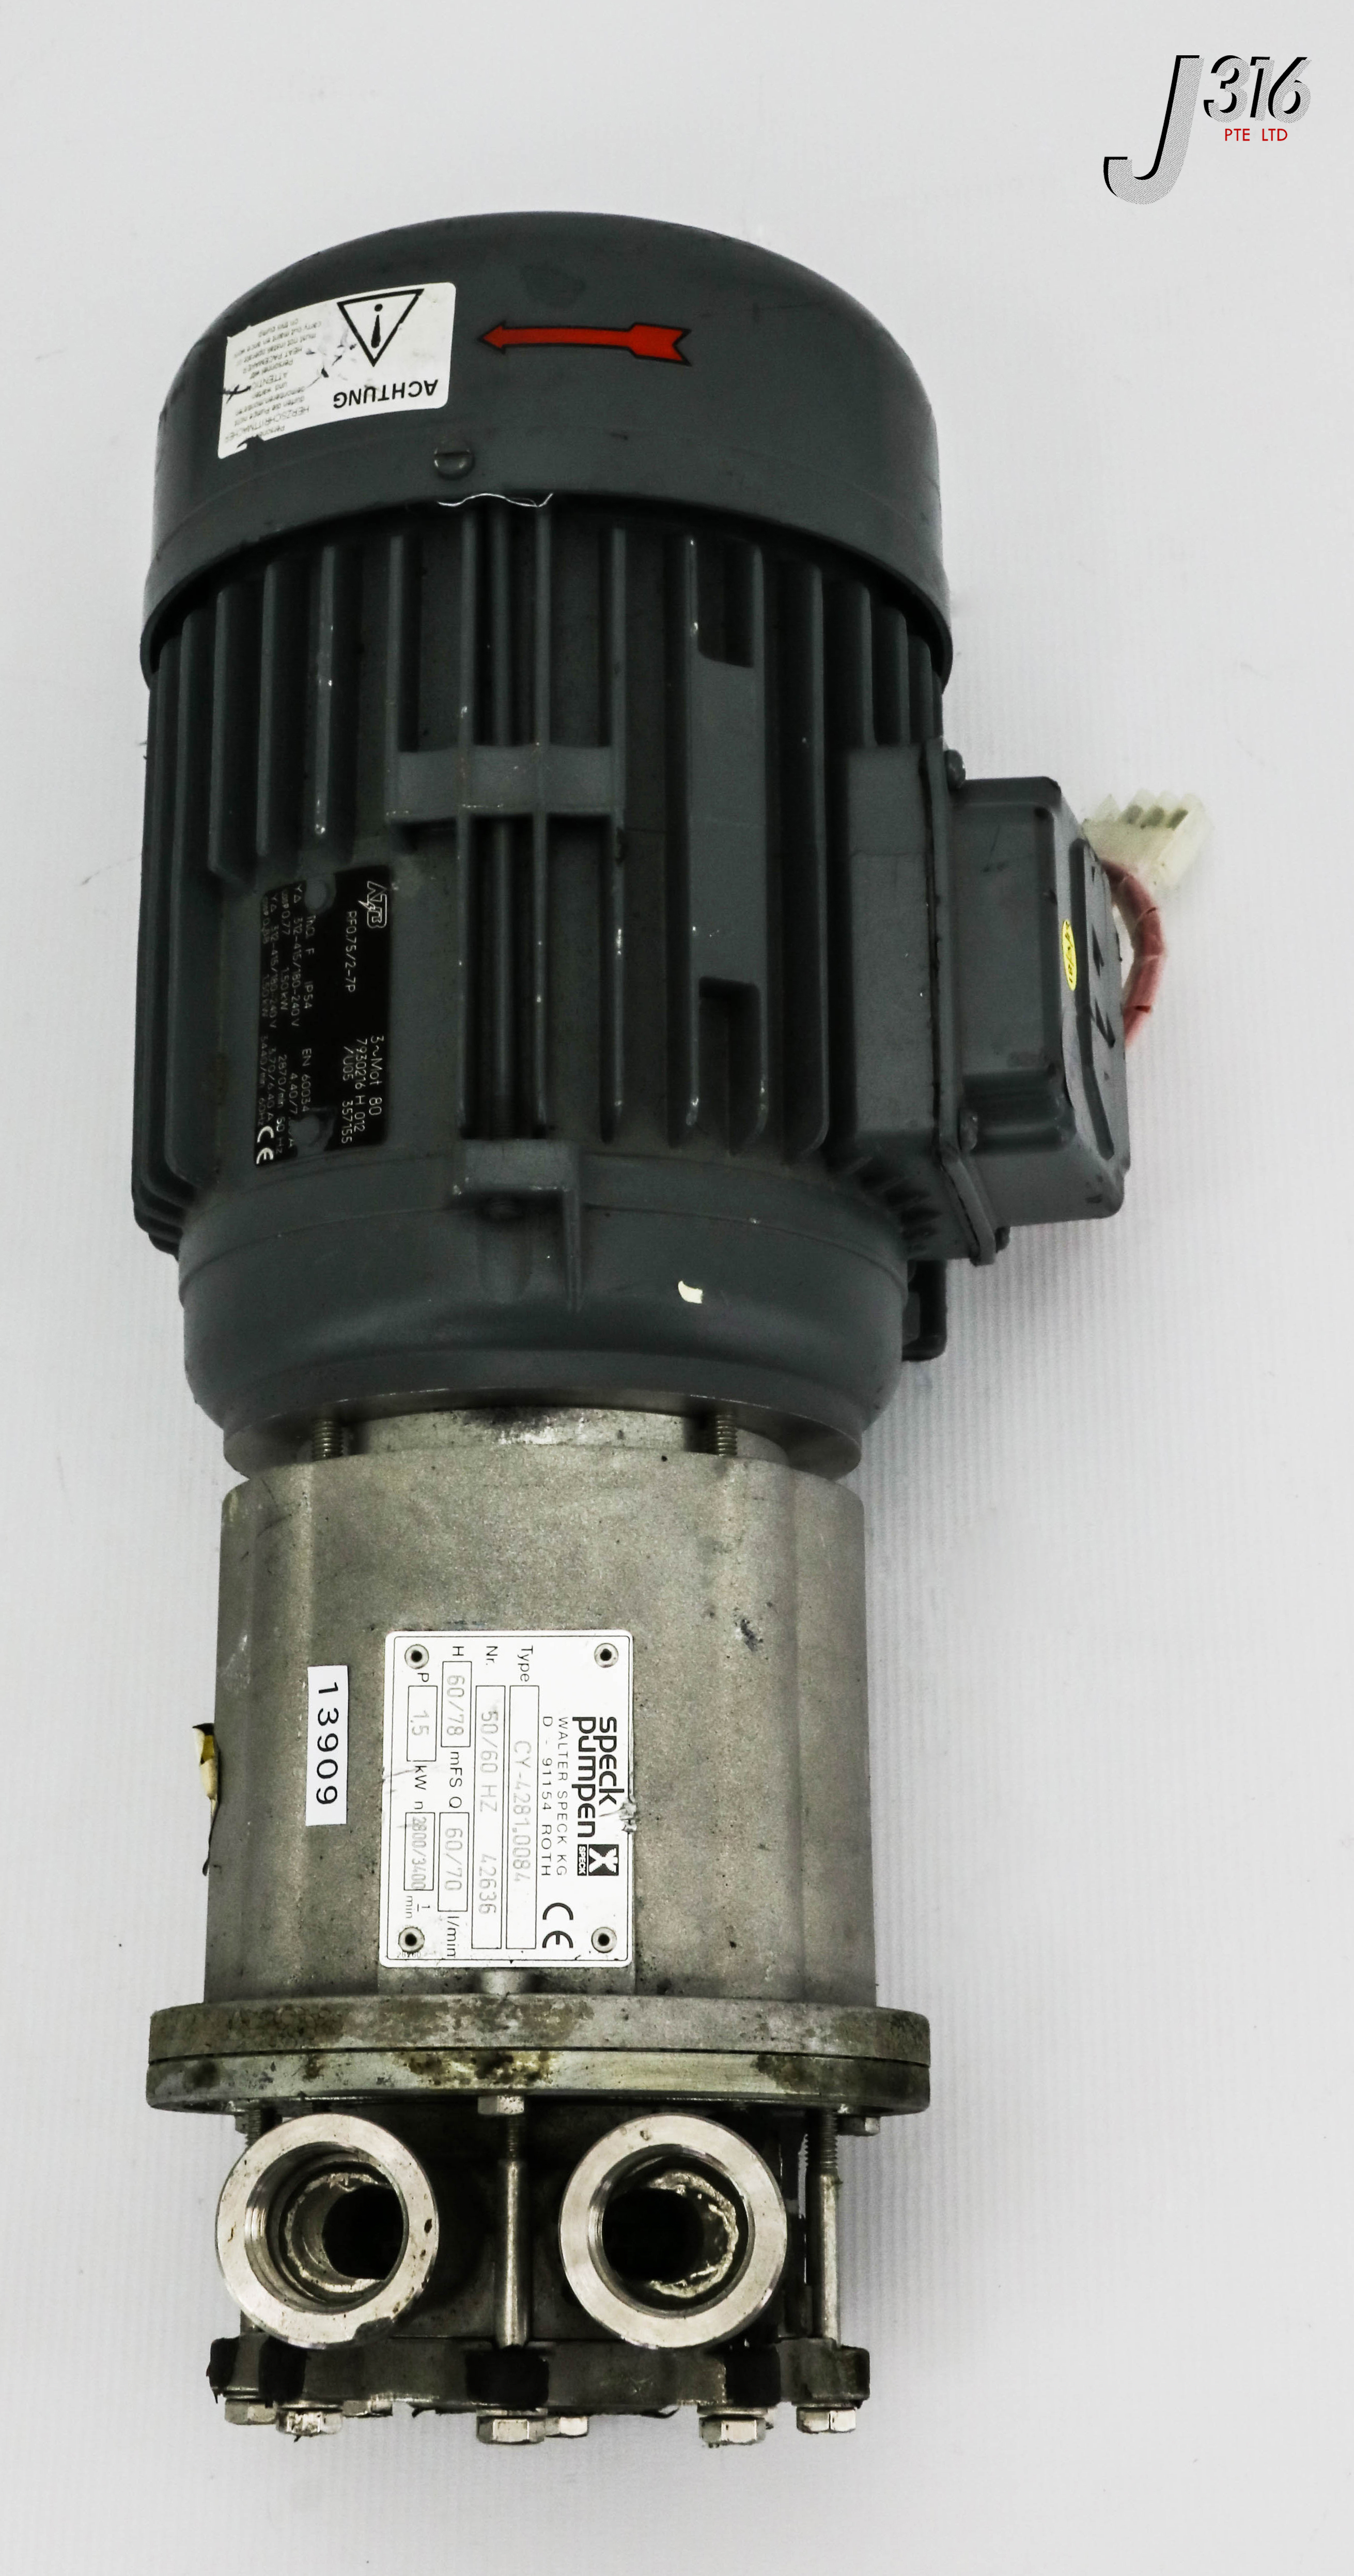 8337 CEMO - Motorpumpe - 3 bar - 500l/min - 2 Saug